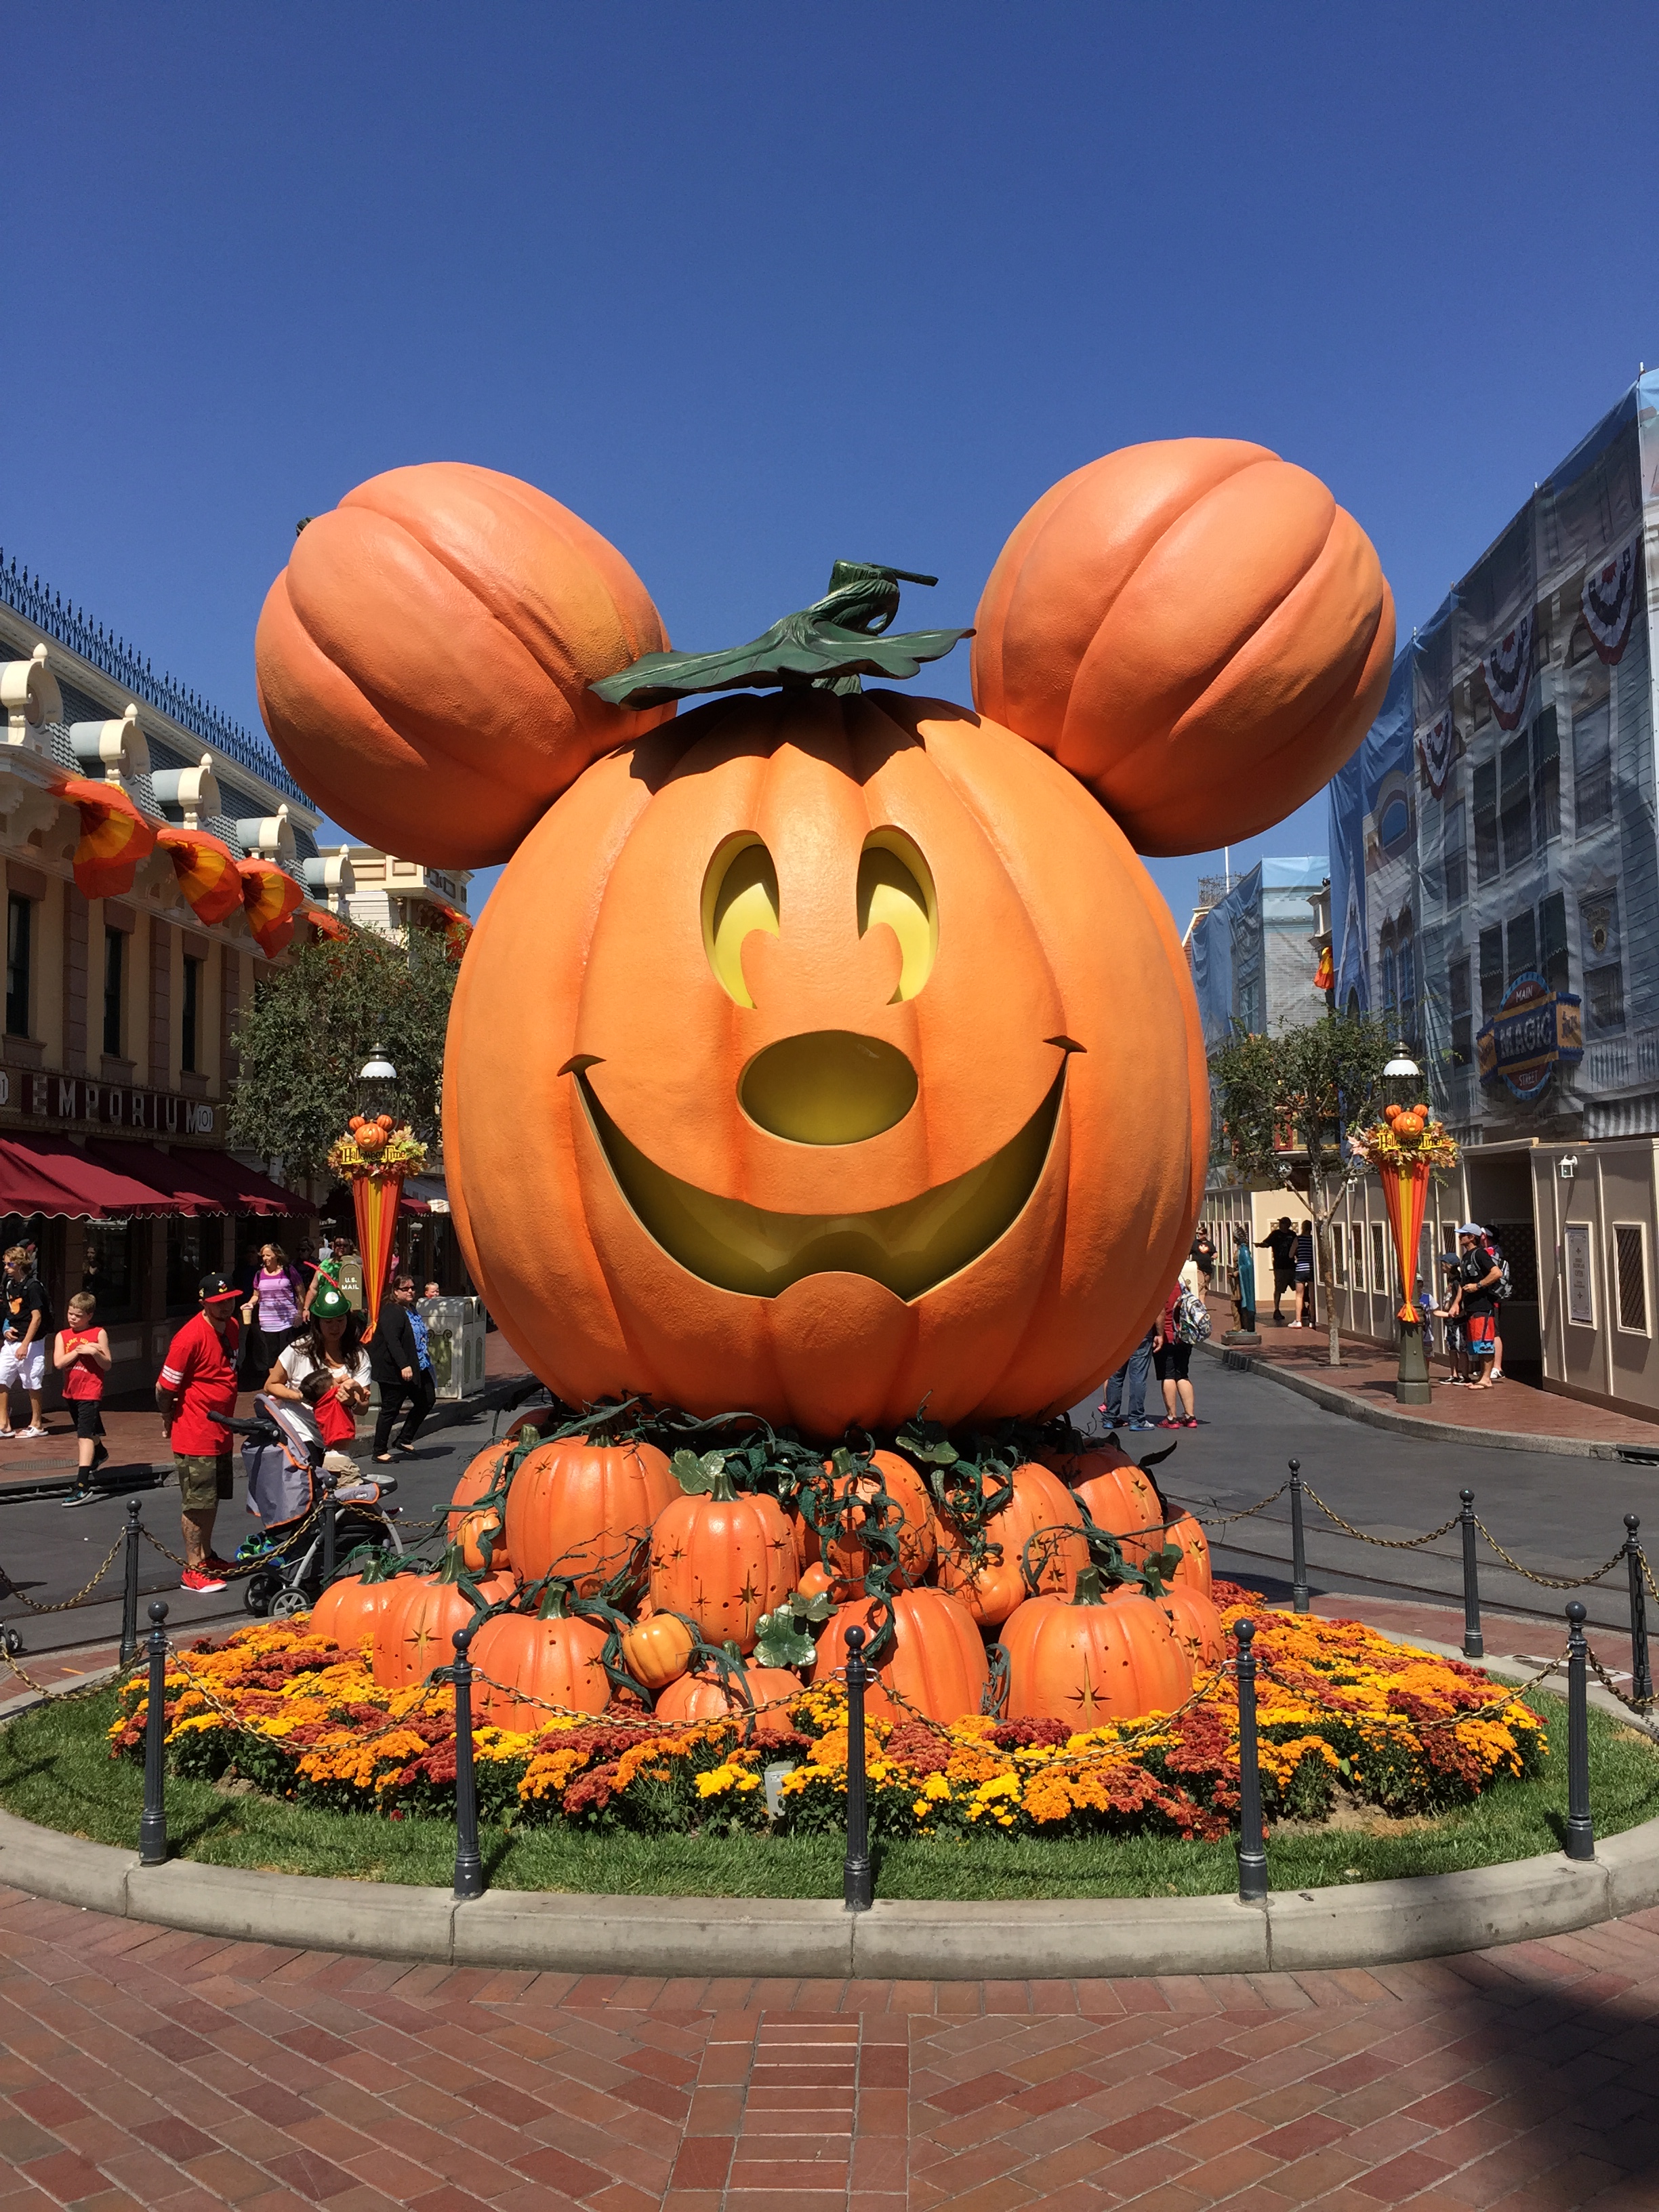 5 Tips on How to Best Enjoy the Halloween Season at Disneyland